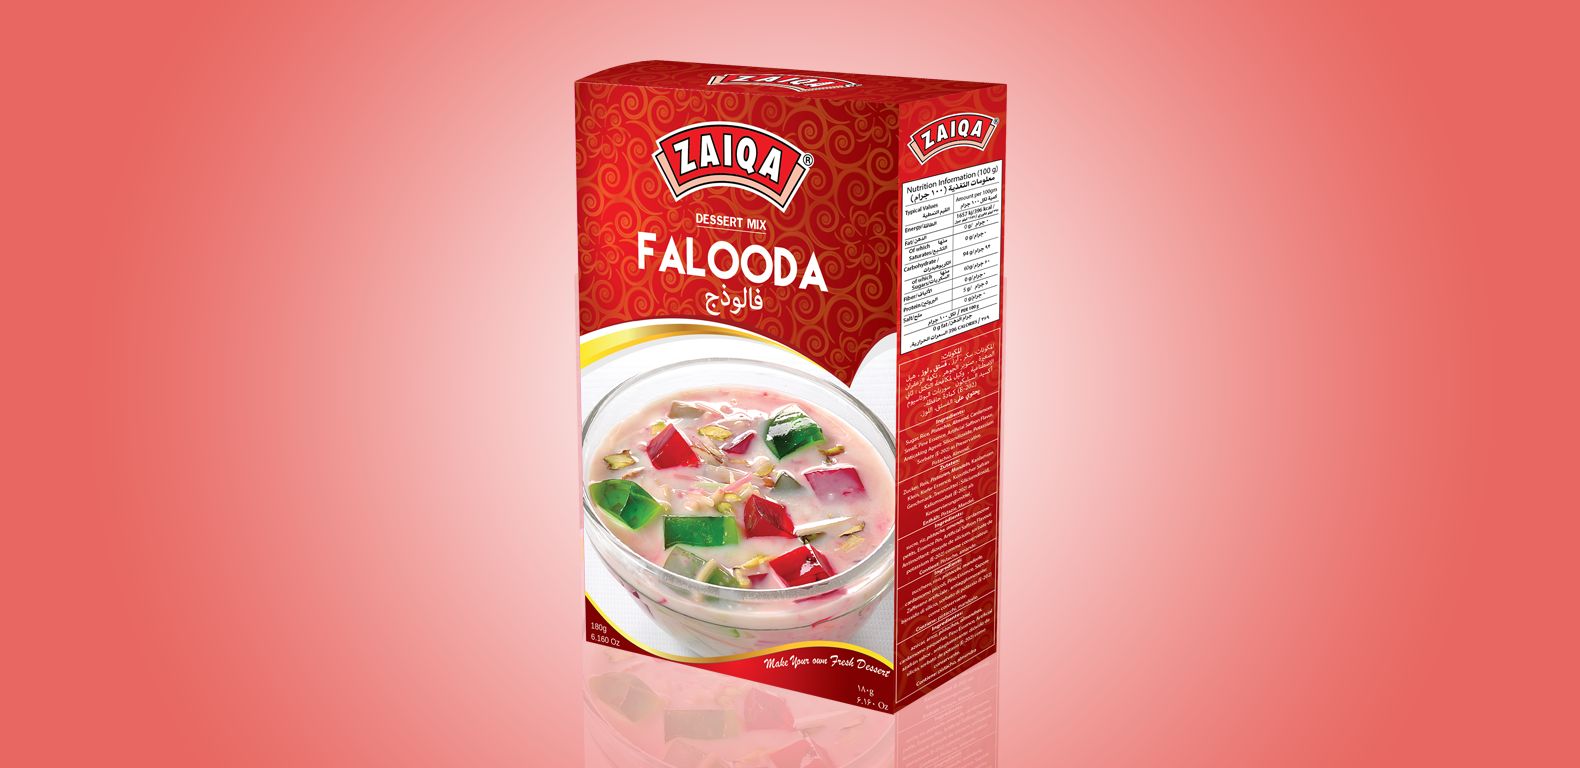 Packaging-Design-Zaiqa-Desserts-Falooda